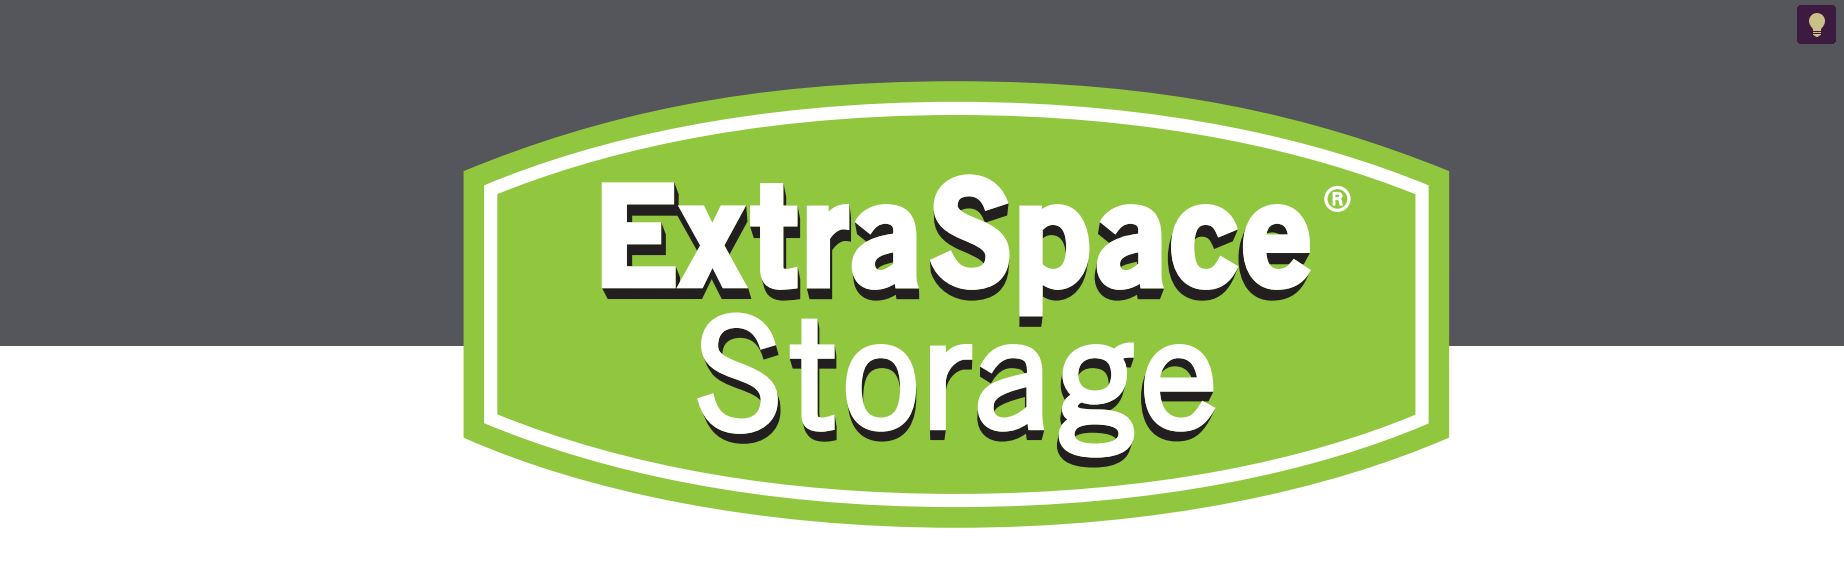 Extra Space Storage logo graphic